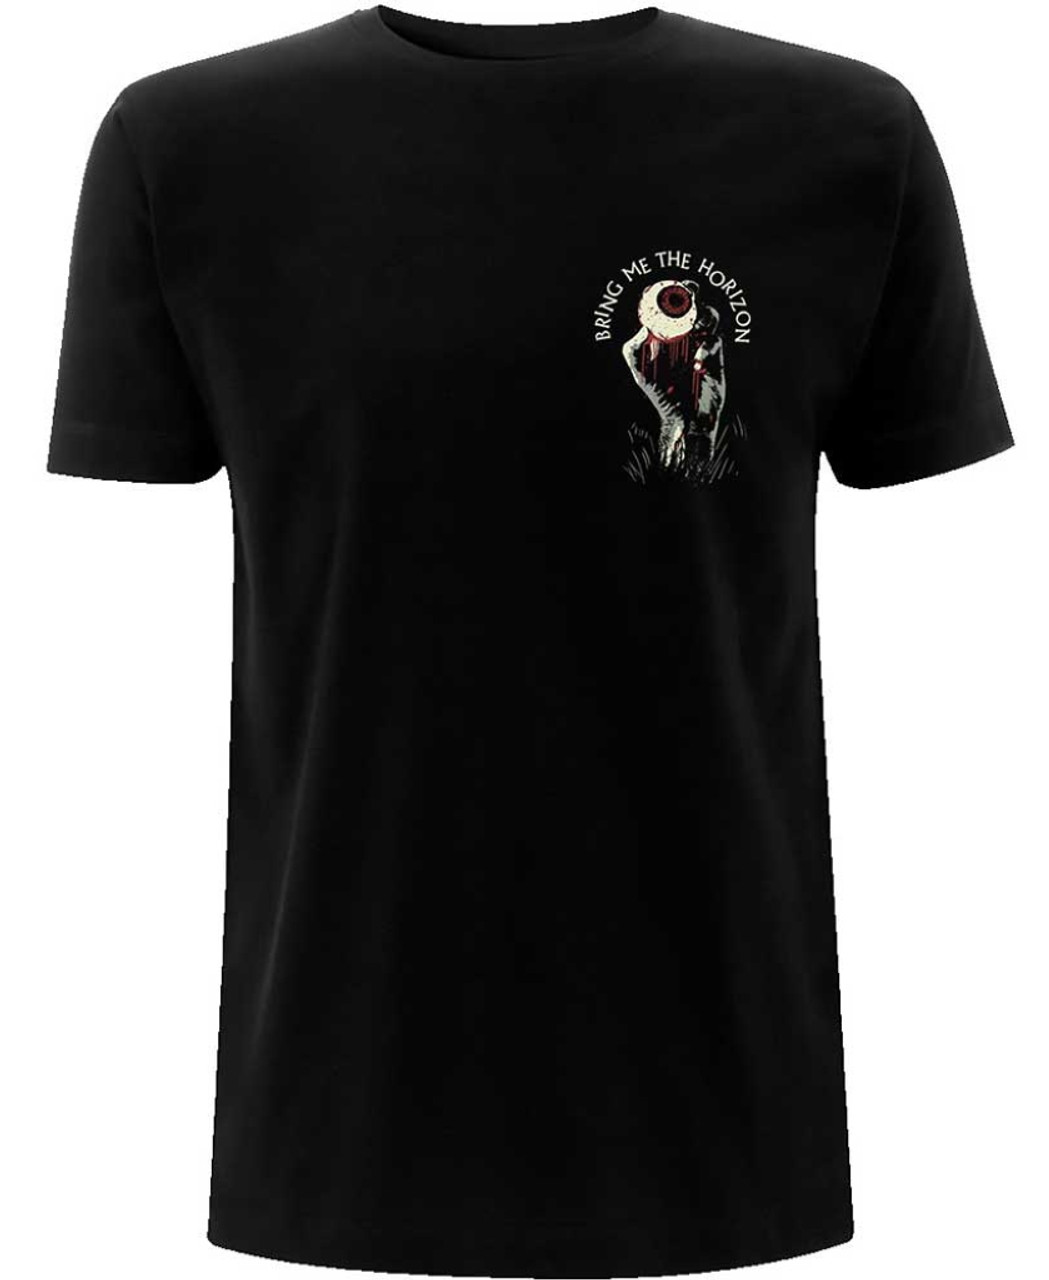 Bring Me The Horizon 'Zombie Eye' (Black) T-Shirt